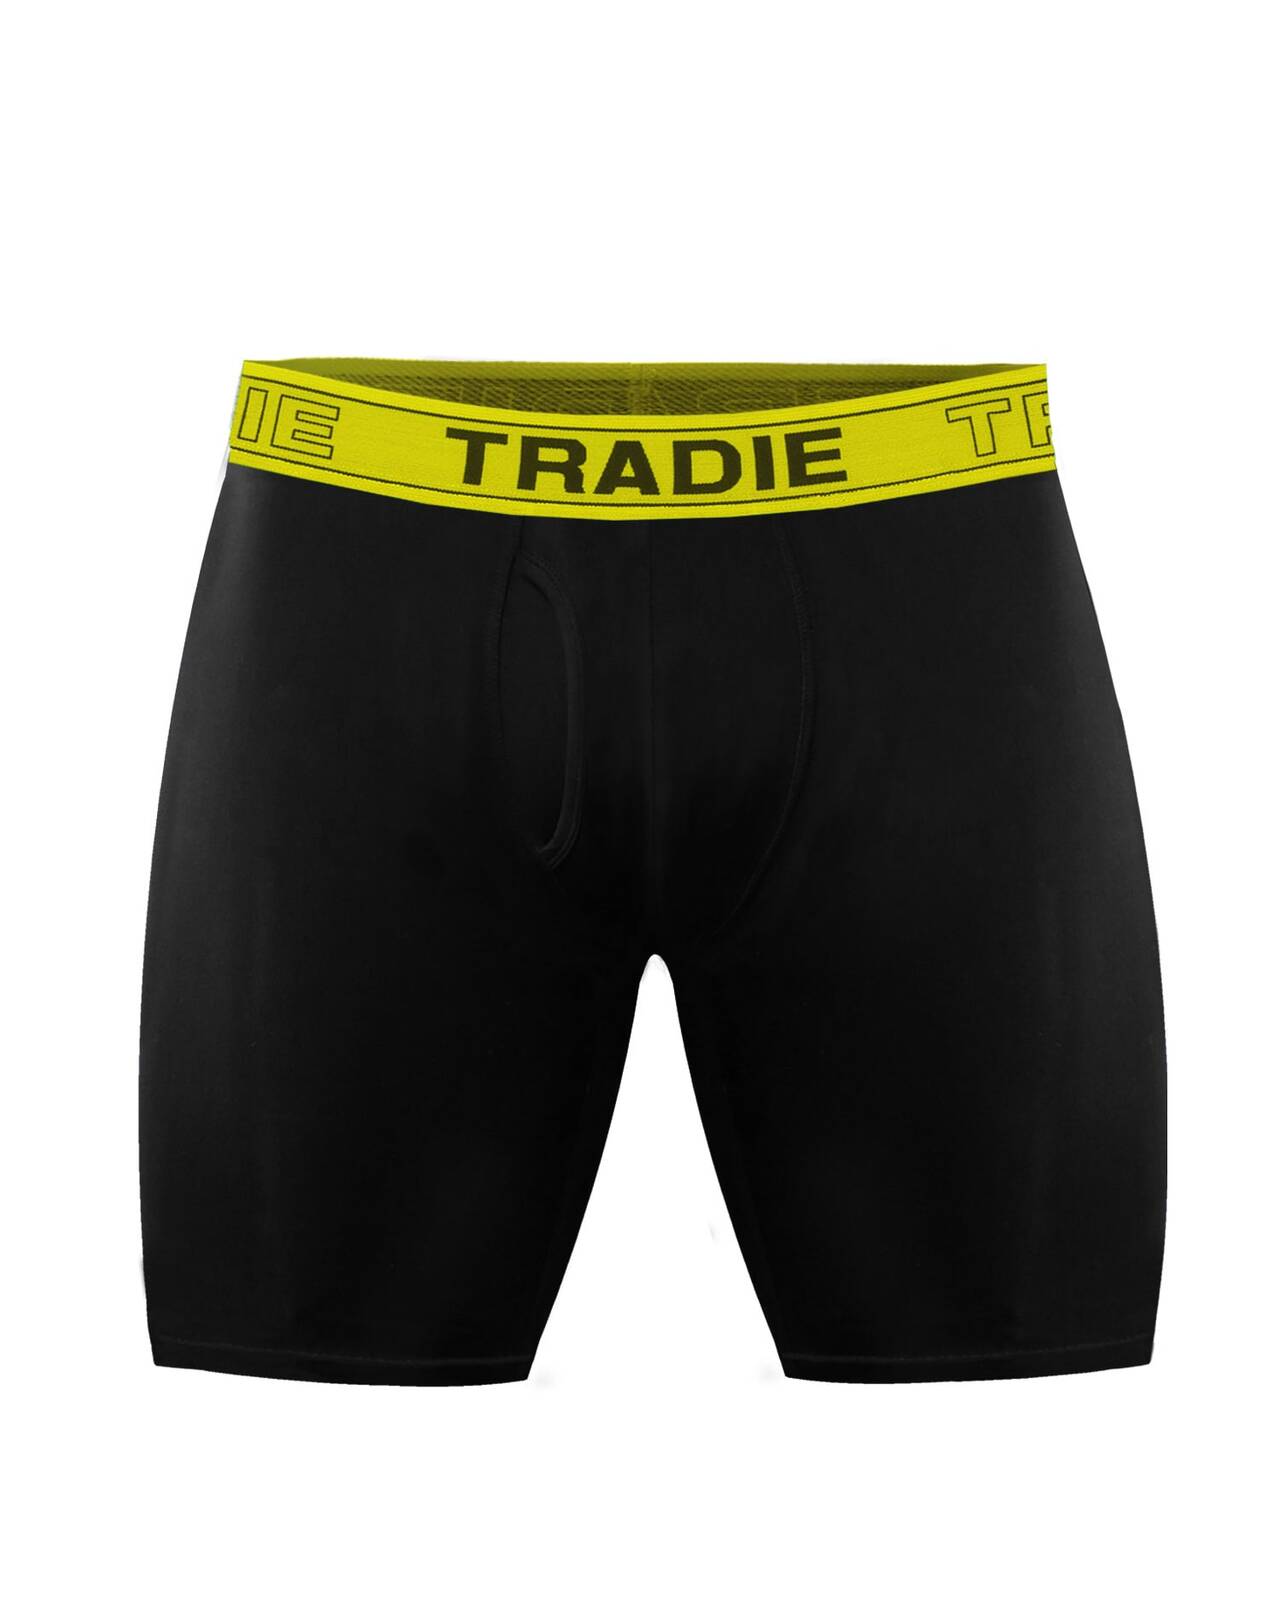 Mens 2 Pack Tradie No Chafe Boxer Shorts Long Leg Trunk Black Yellow (9SK)